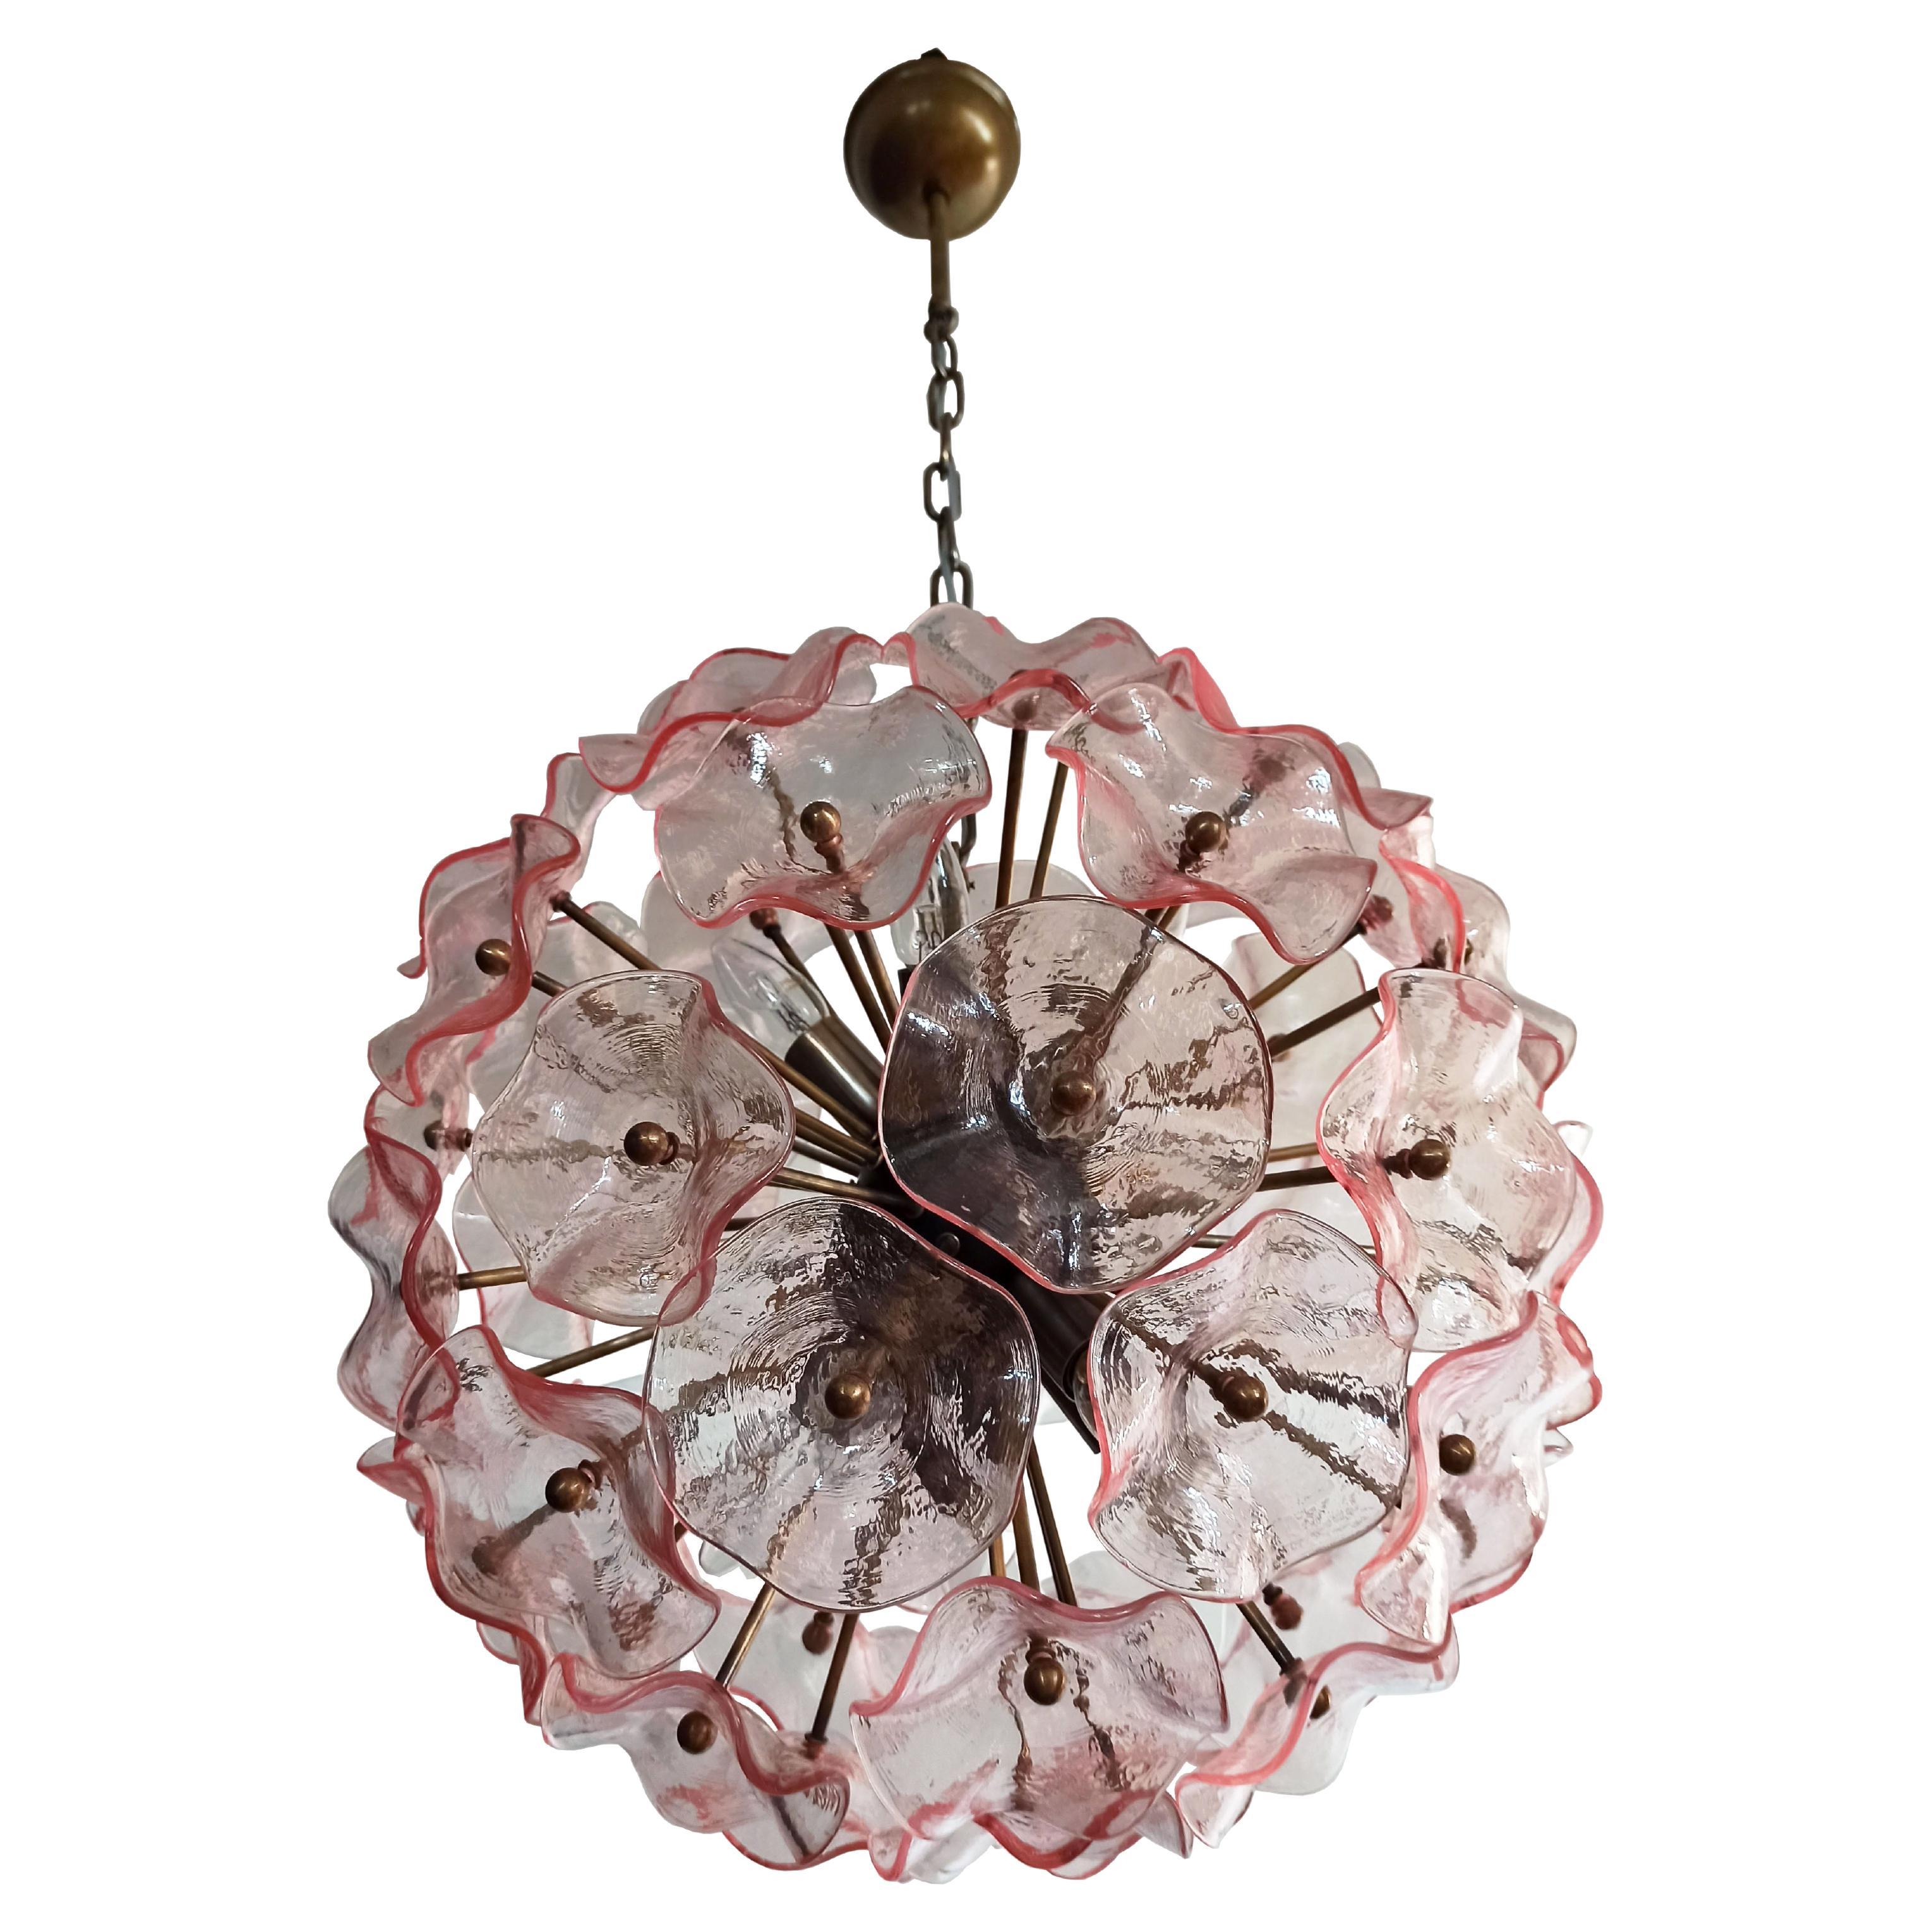 Atemberaubender italienischer Sputnik-Kristall-Kronleuchter im Vintage-Stil, 51 rosa Gläser